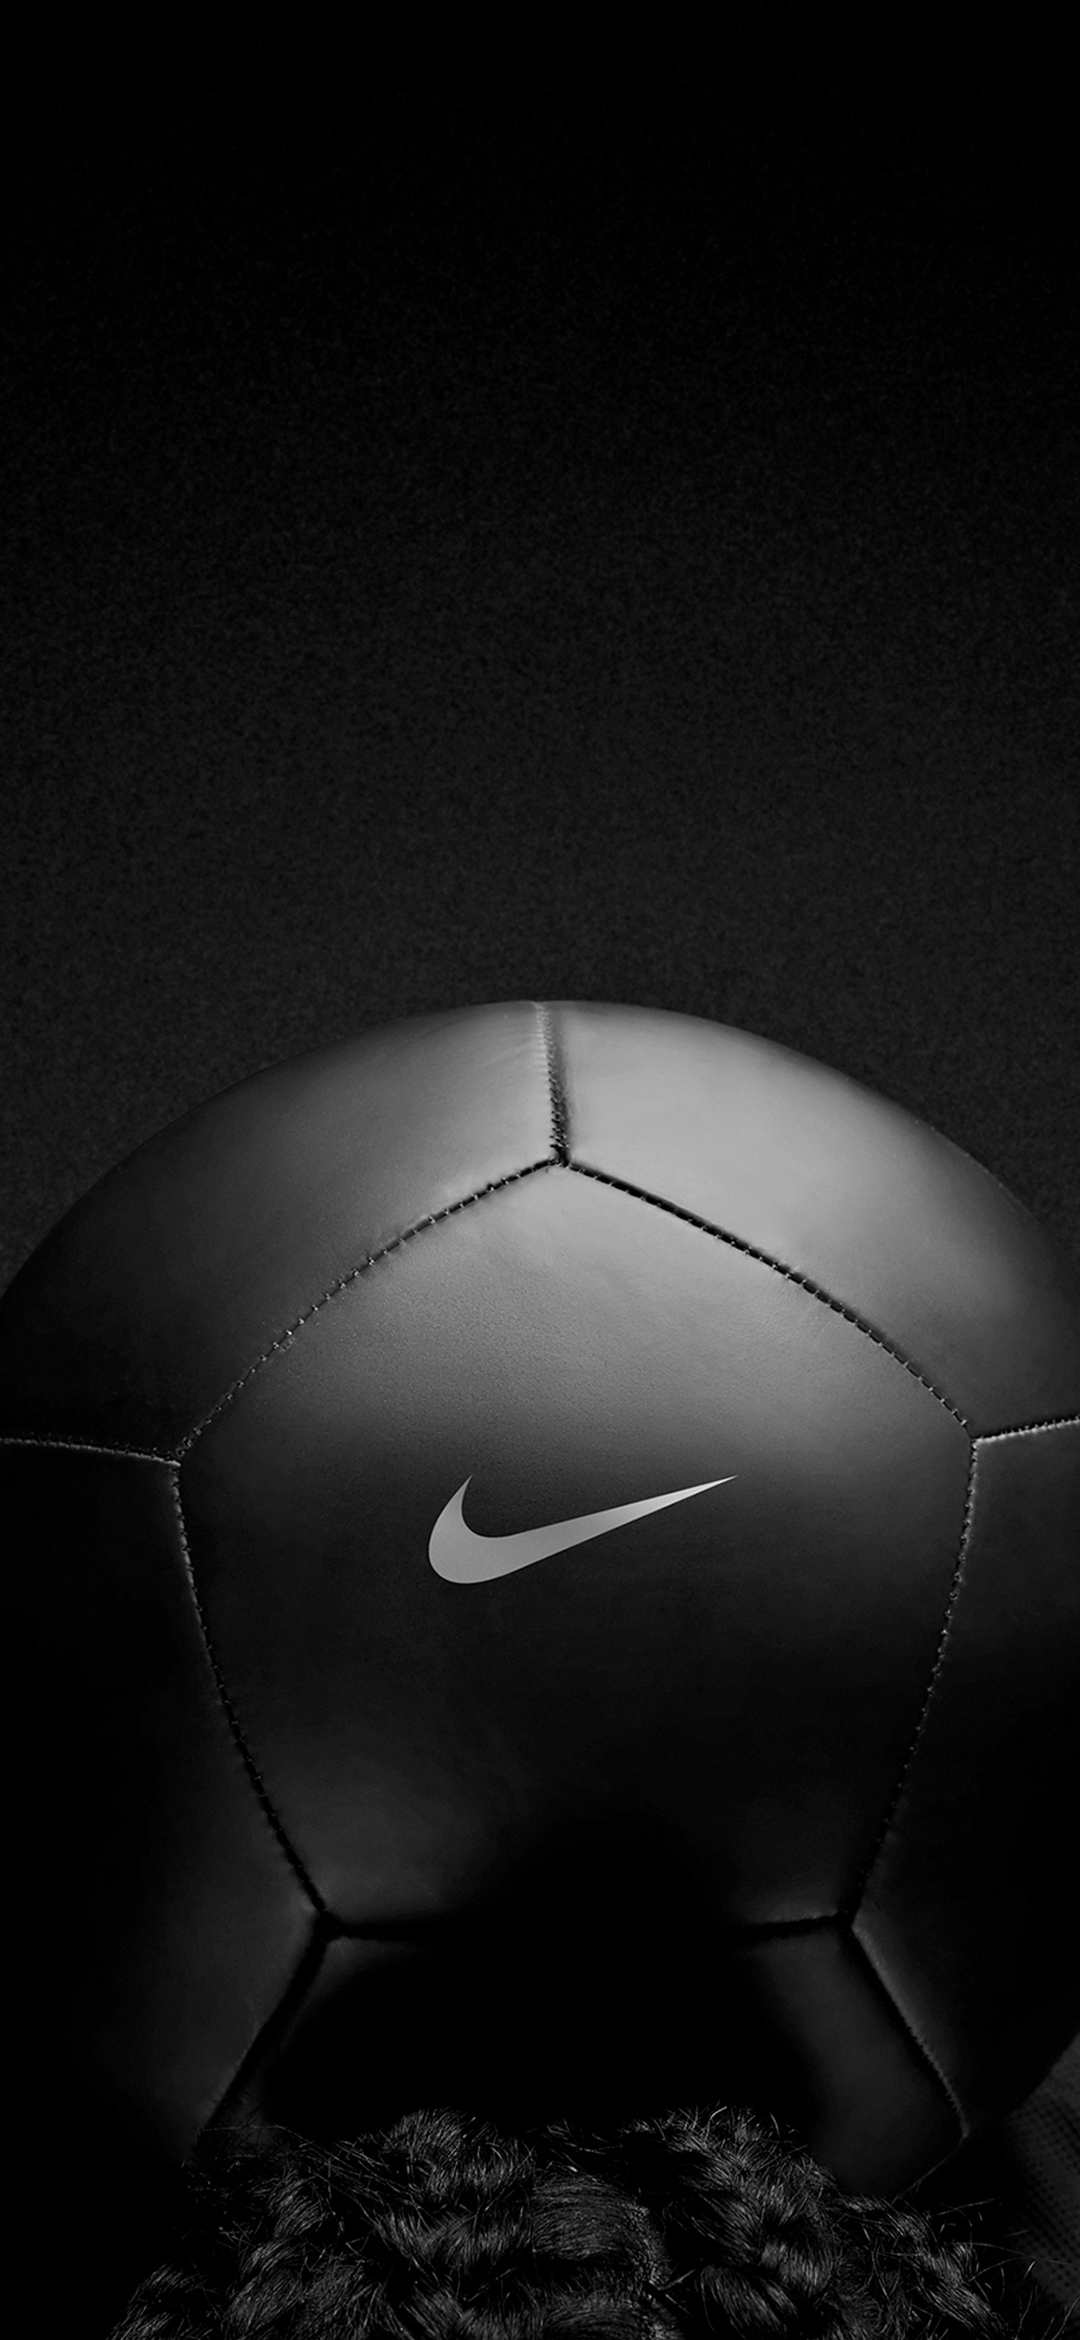 Black Nike Soccer Ball Oppo Reno A Android スマホ壁紙 待ち受け スマラン